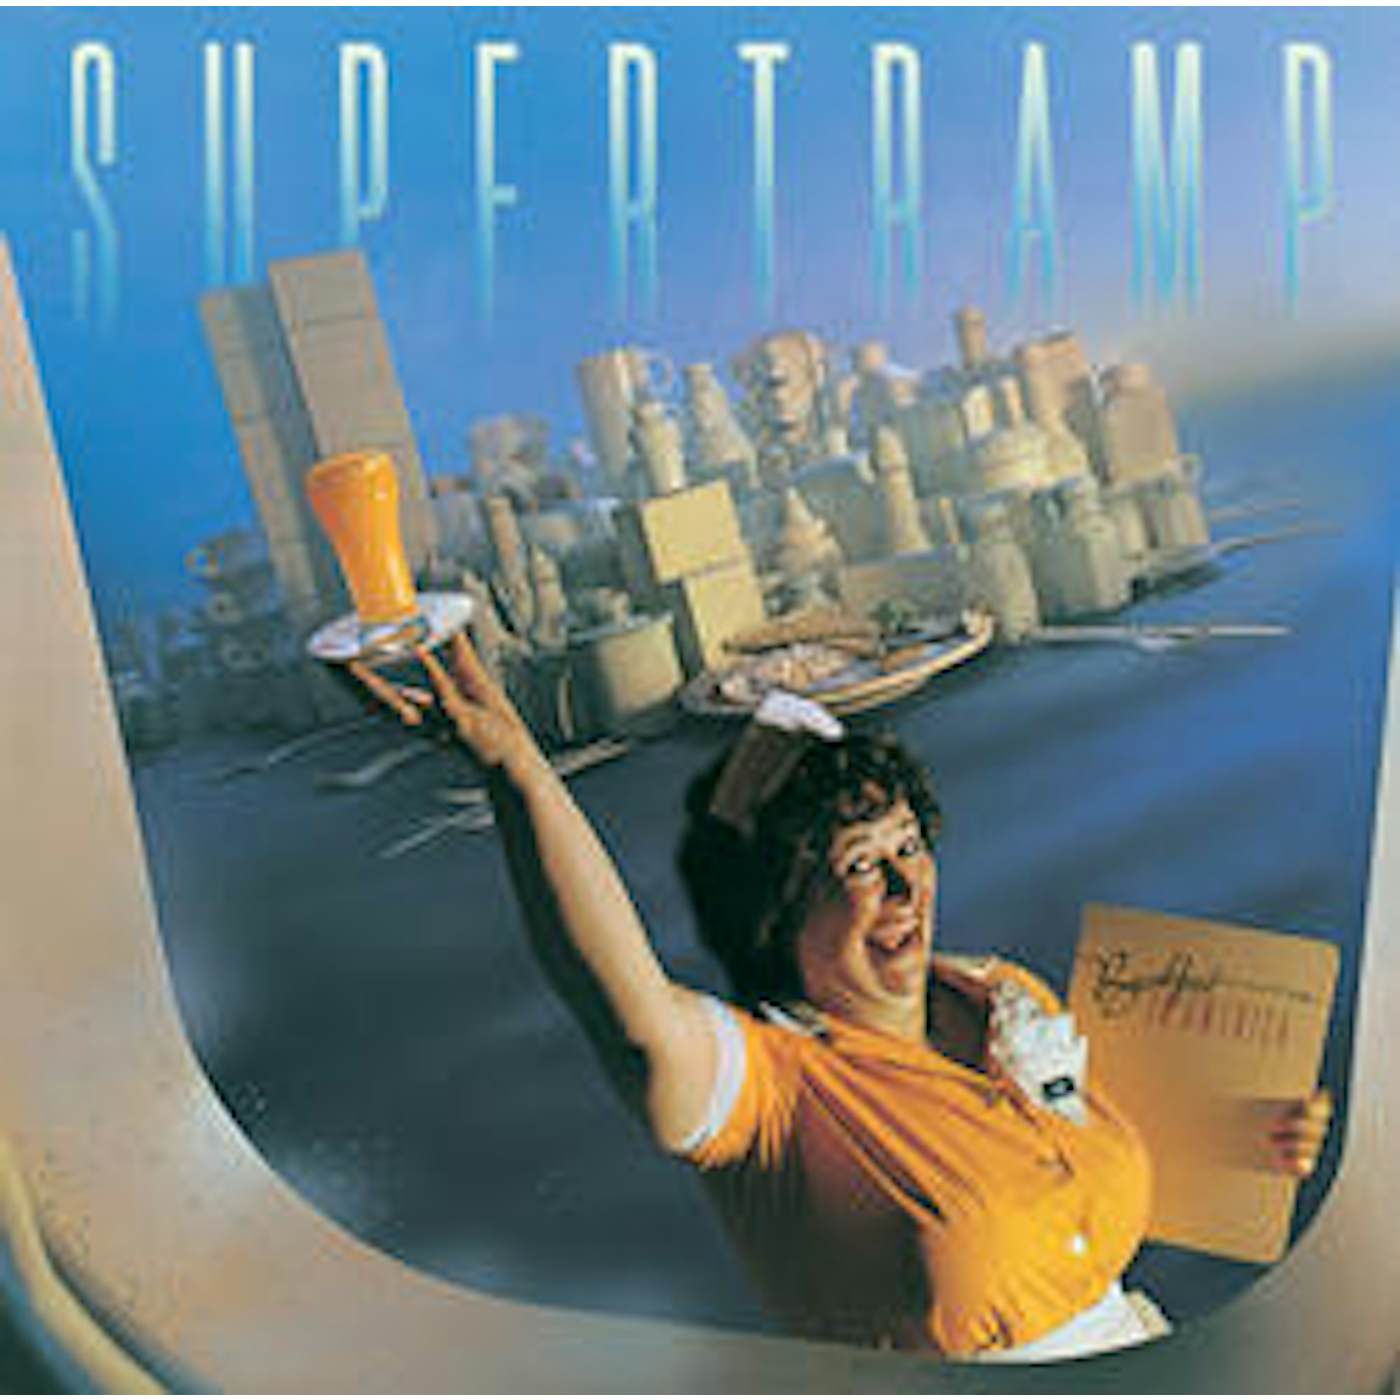 Supertramp Breakfast In America Vinyl Record